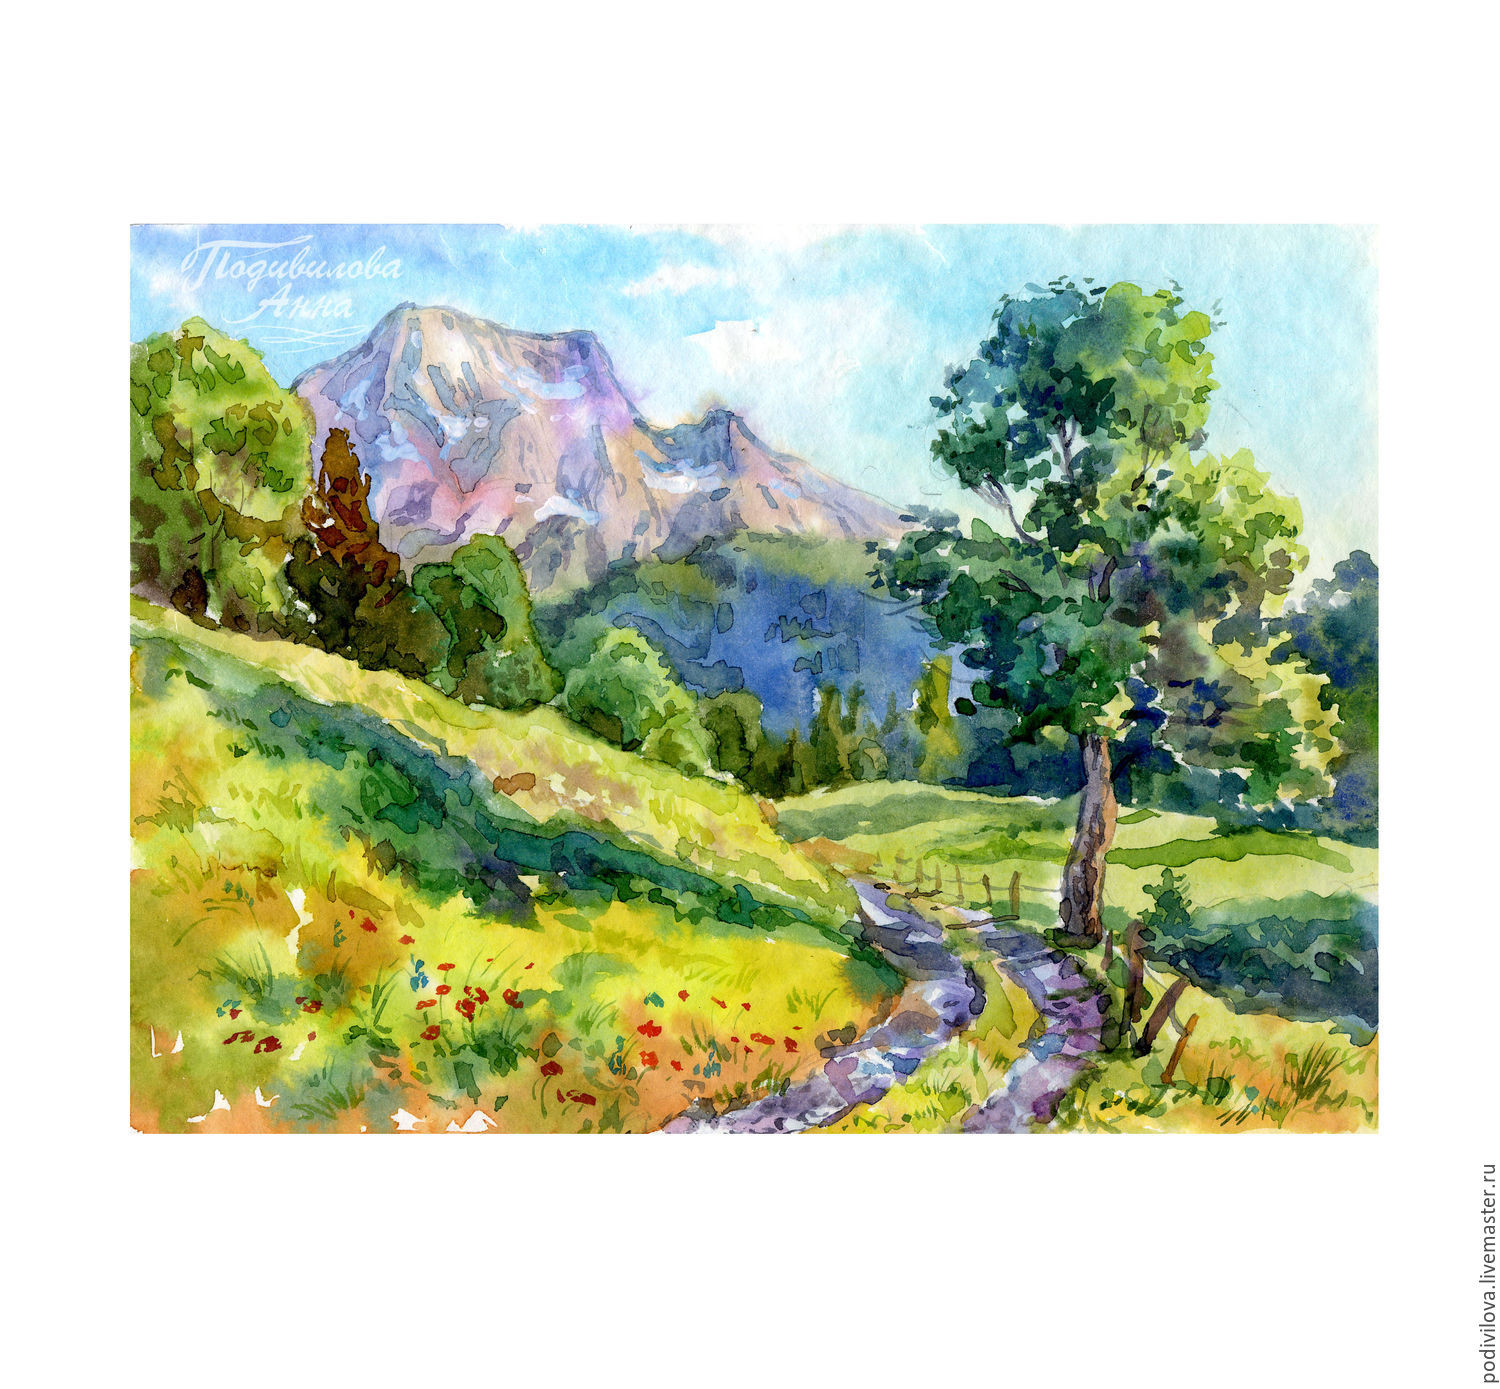 Watercolor Paintings Landscape
 "Mountain landscape" watercolor painting painting